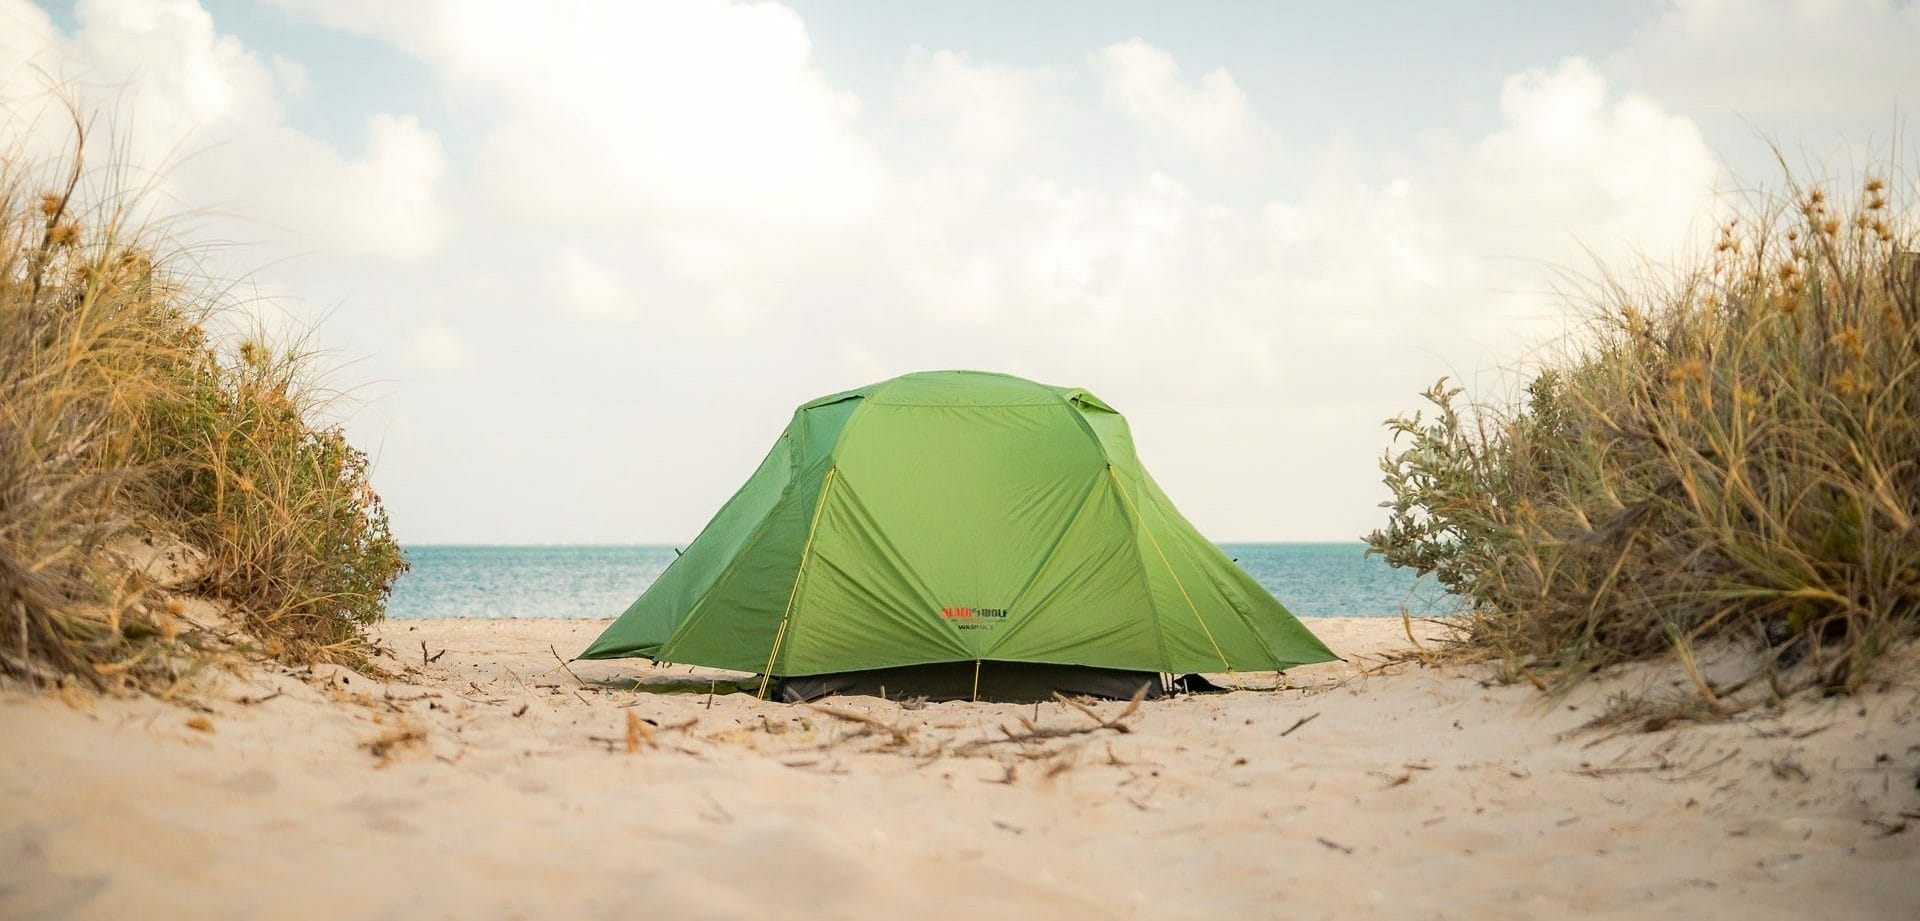 Black Wolf Wasp UL 2 Tent // Gear Review, Joel Johnsson, tent, camping, beach, ocean